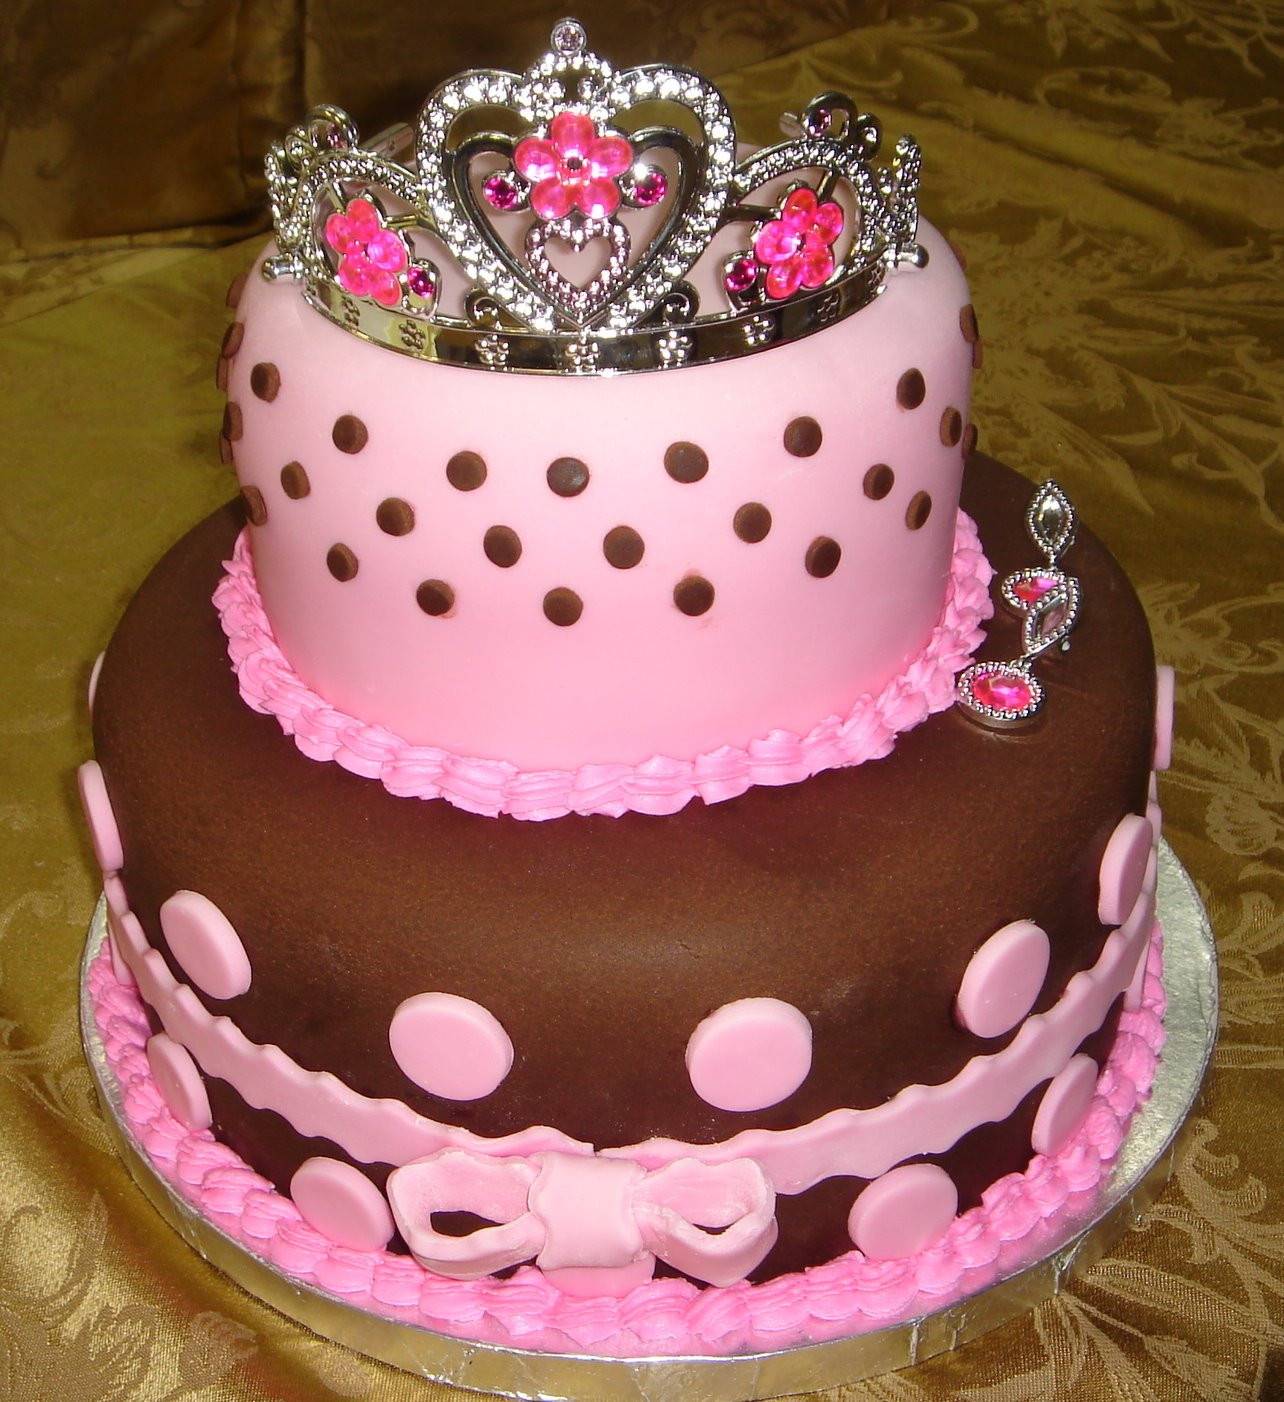 Best ideas about Birthday Cake Design
. Save or Pin cake birthday kids fondant buttercream princess castle Now.